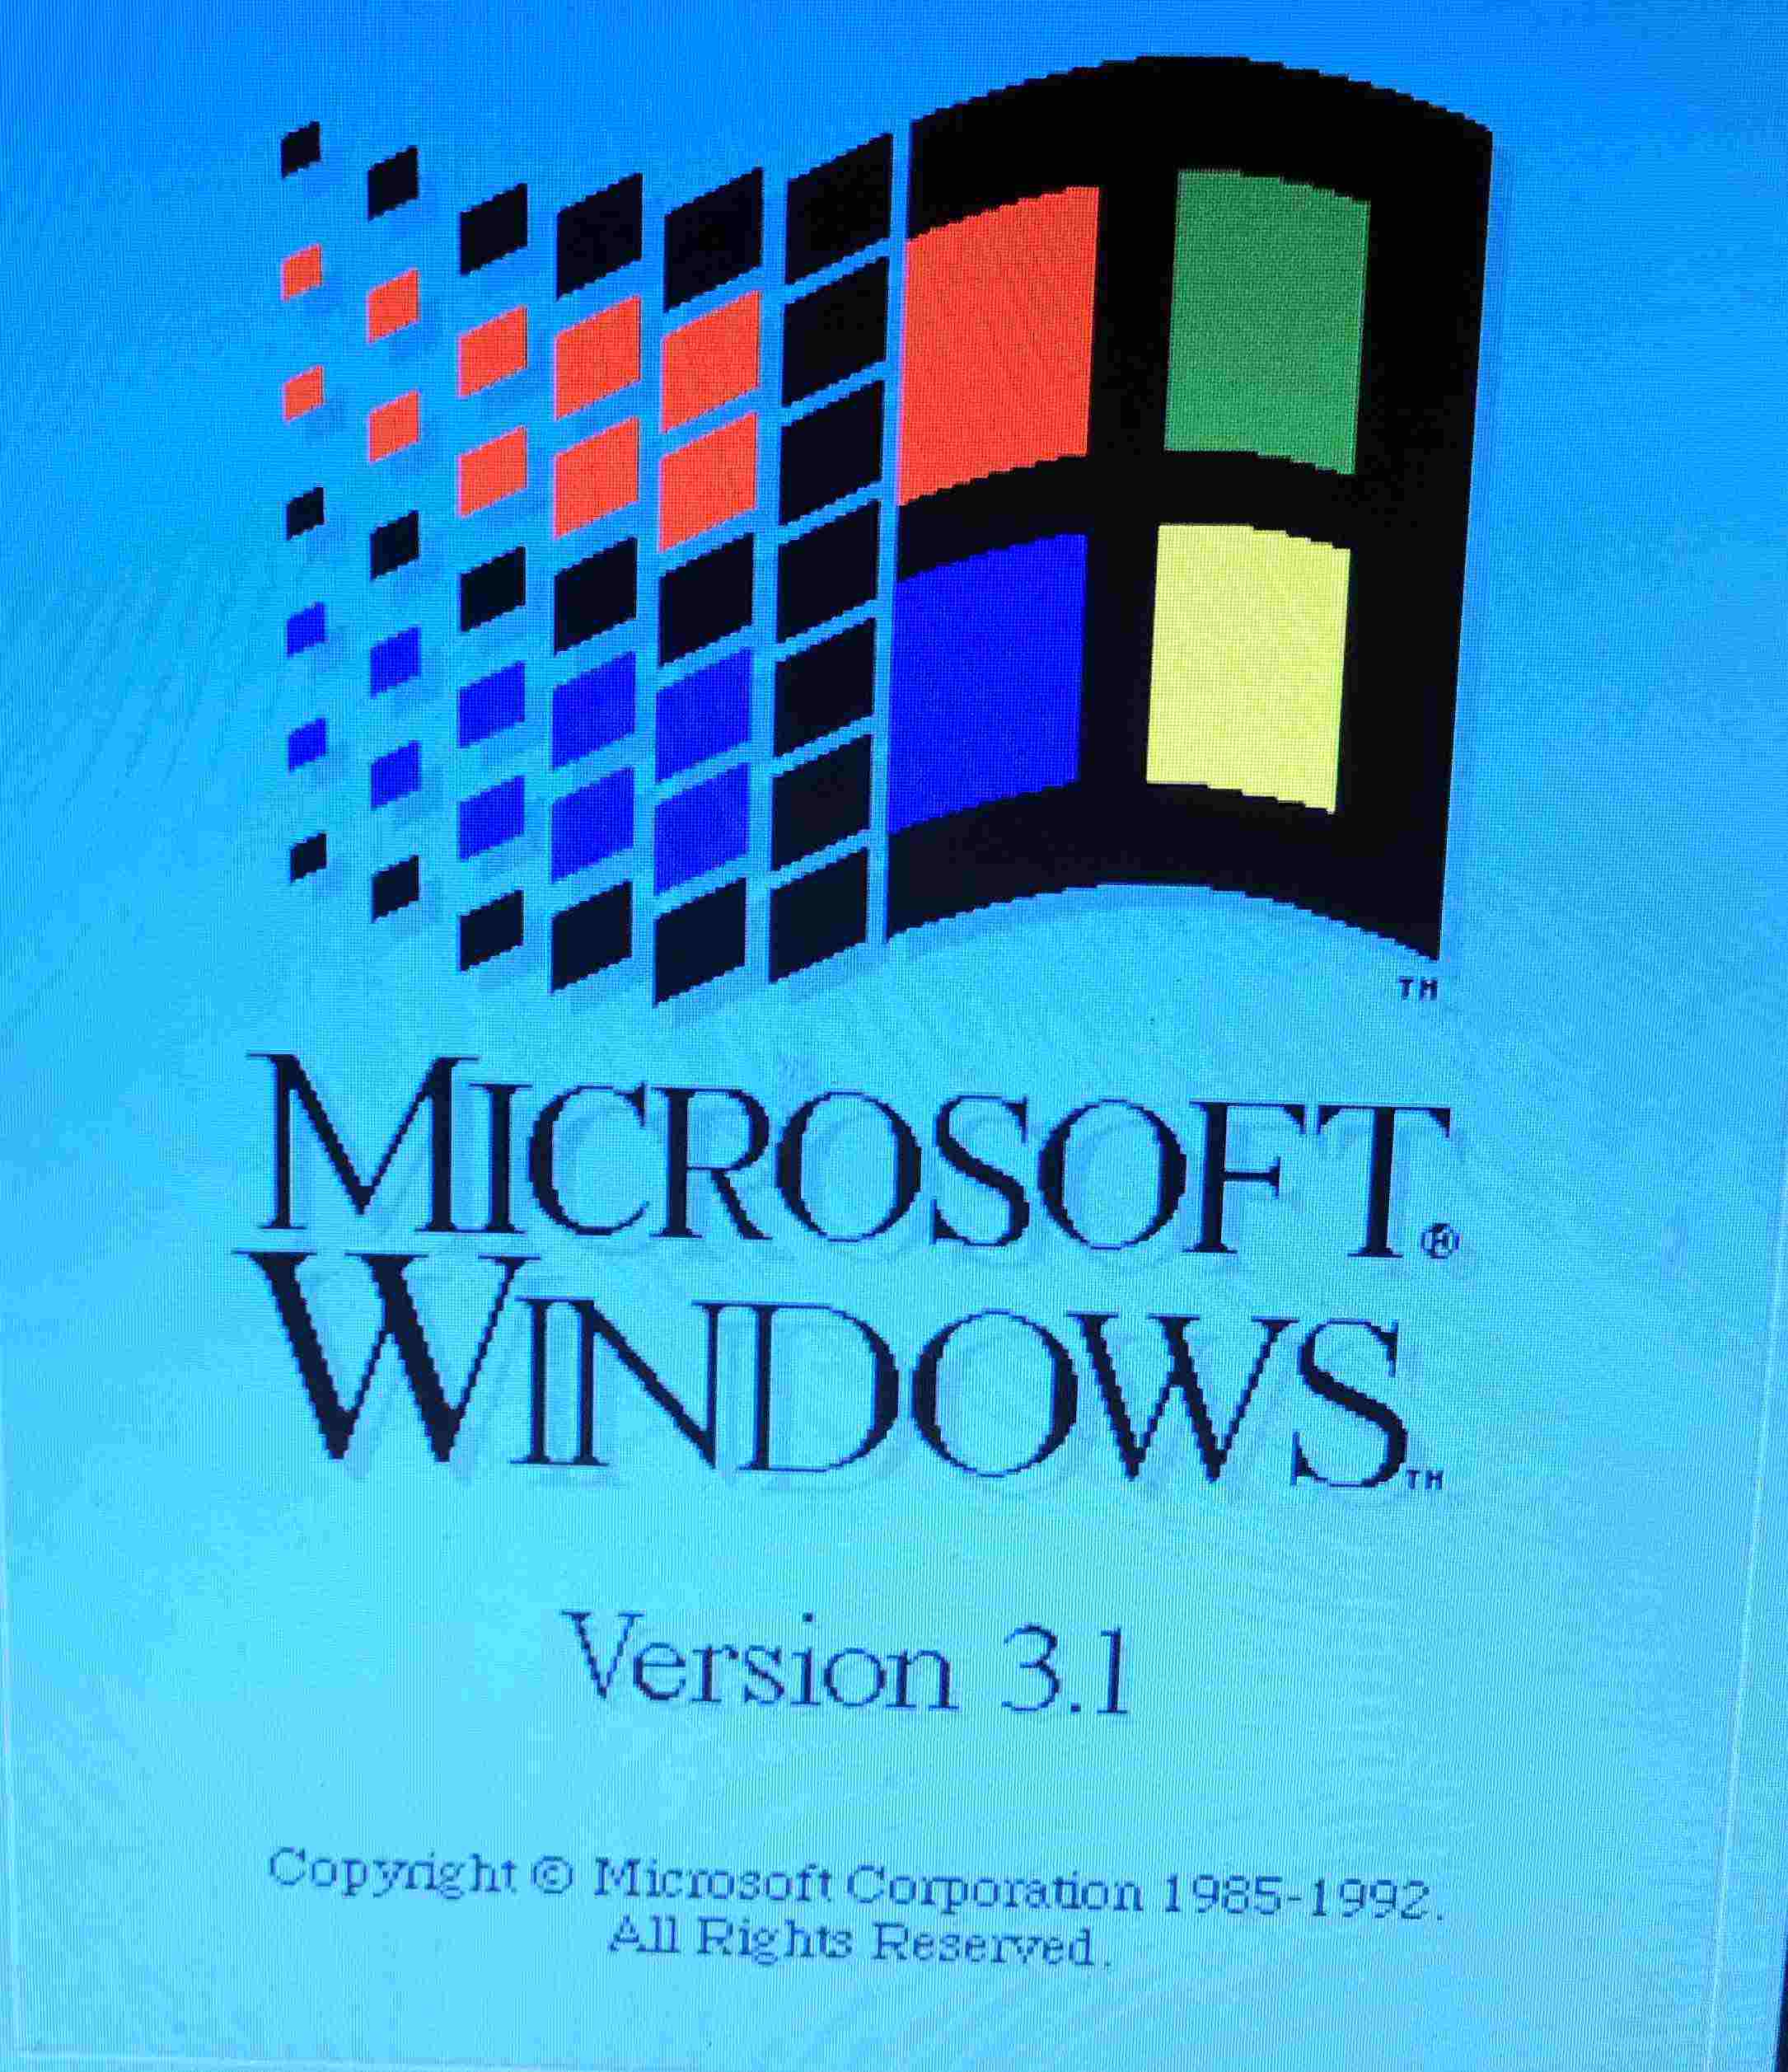 Windows 3.1 Boot